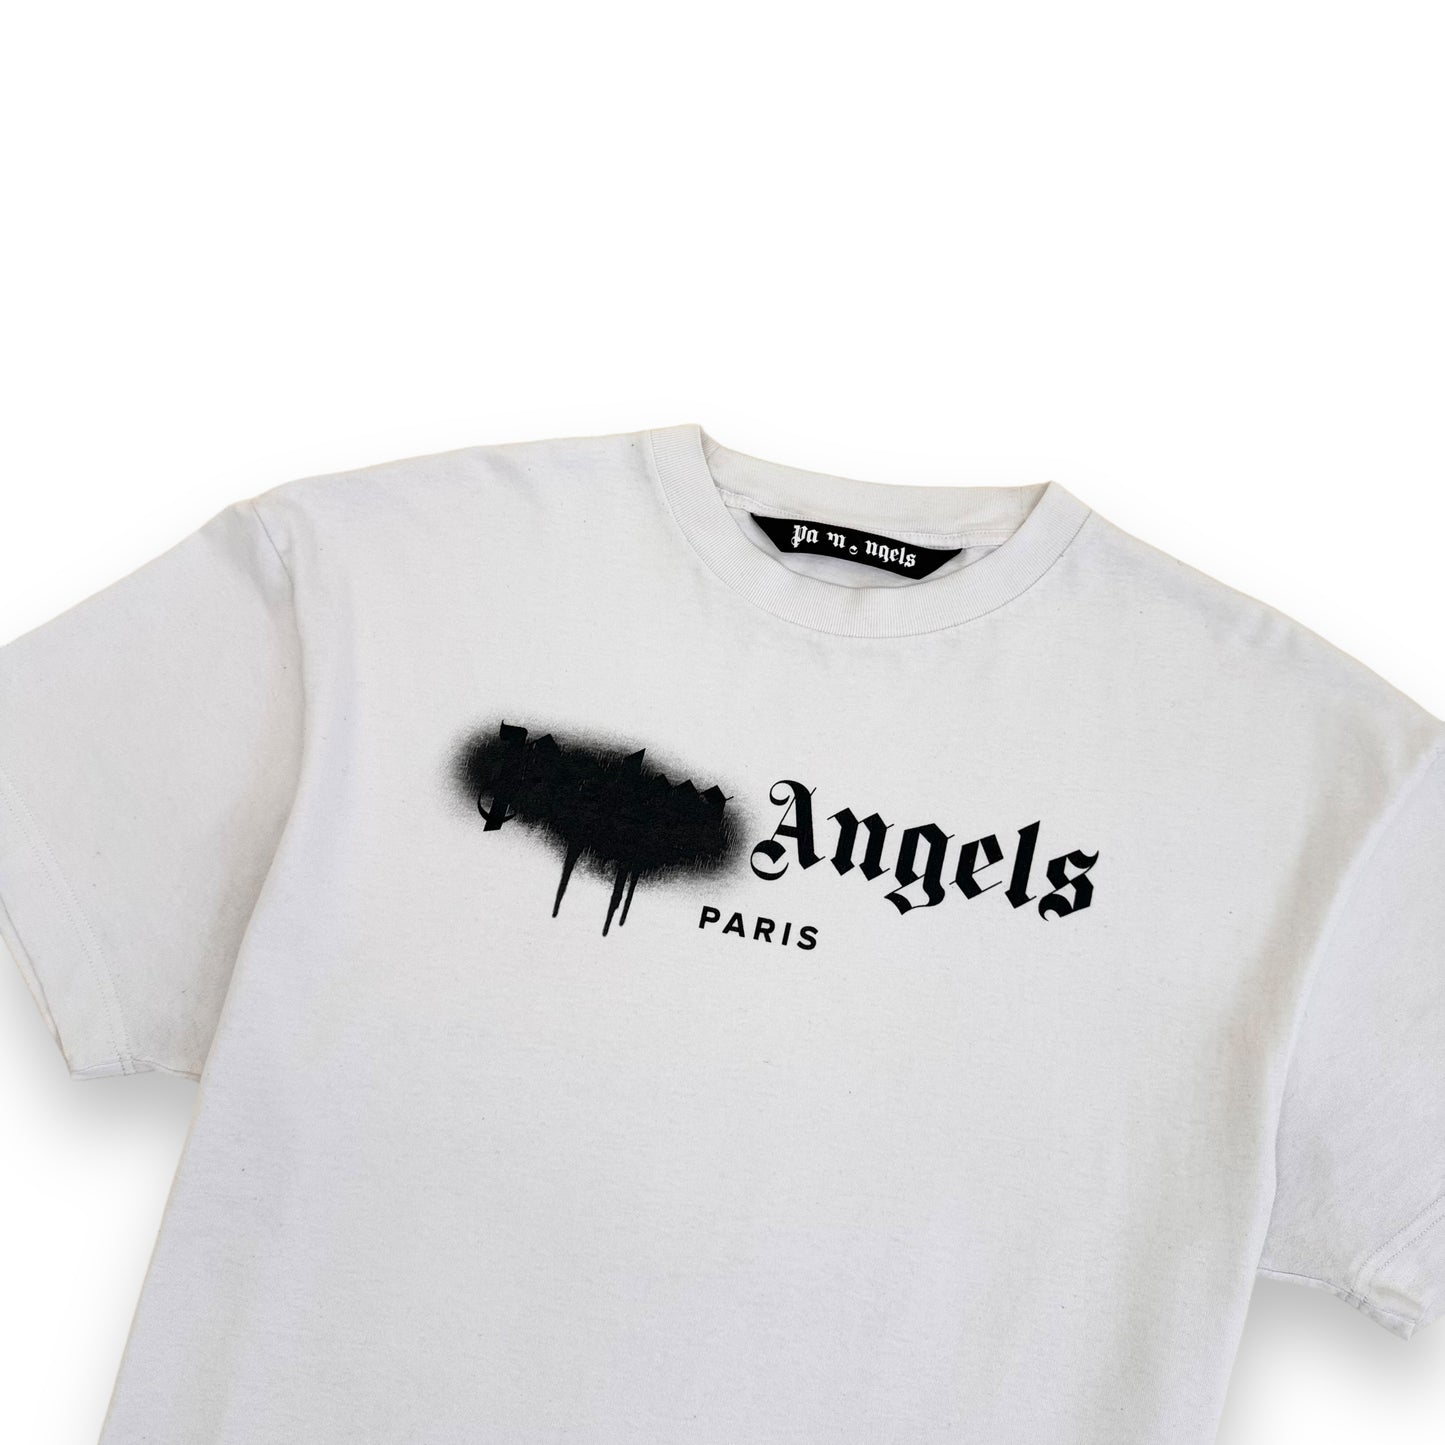 PALM ANGELS SPRAY PAINT PARIS T-SHIRT WHITE XL